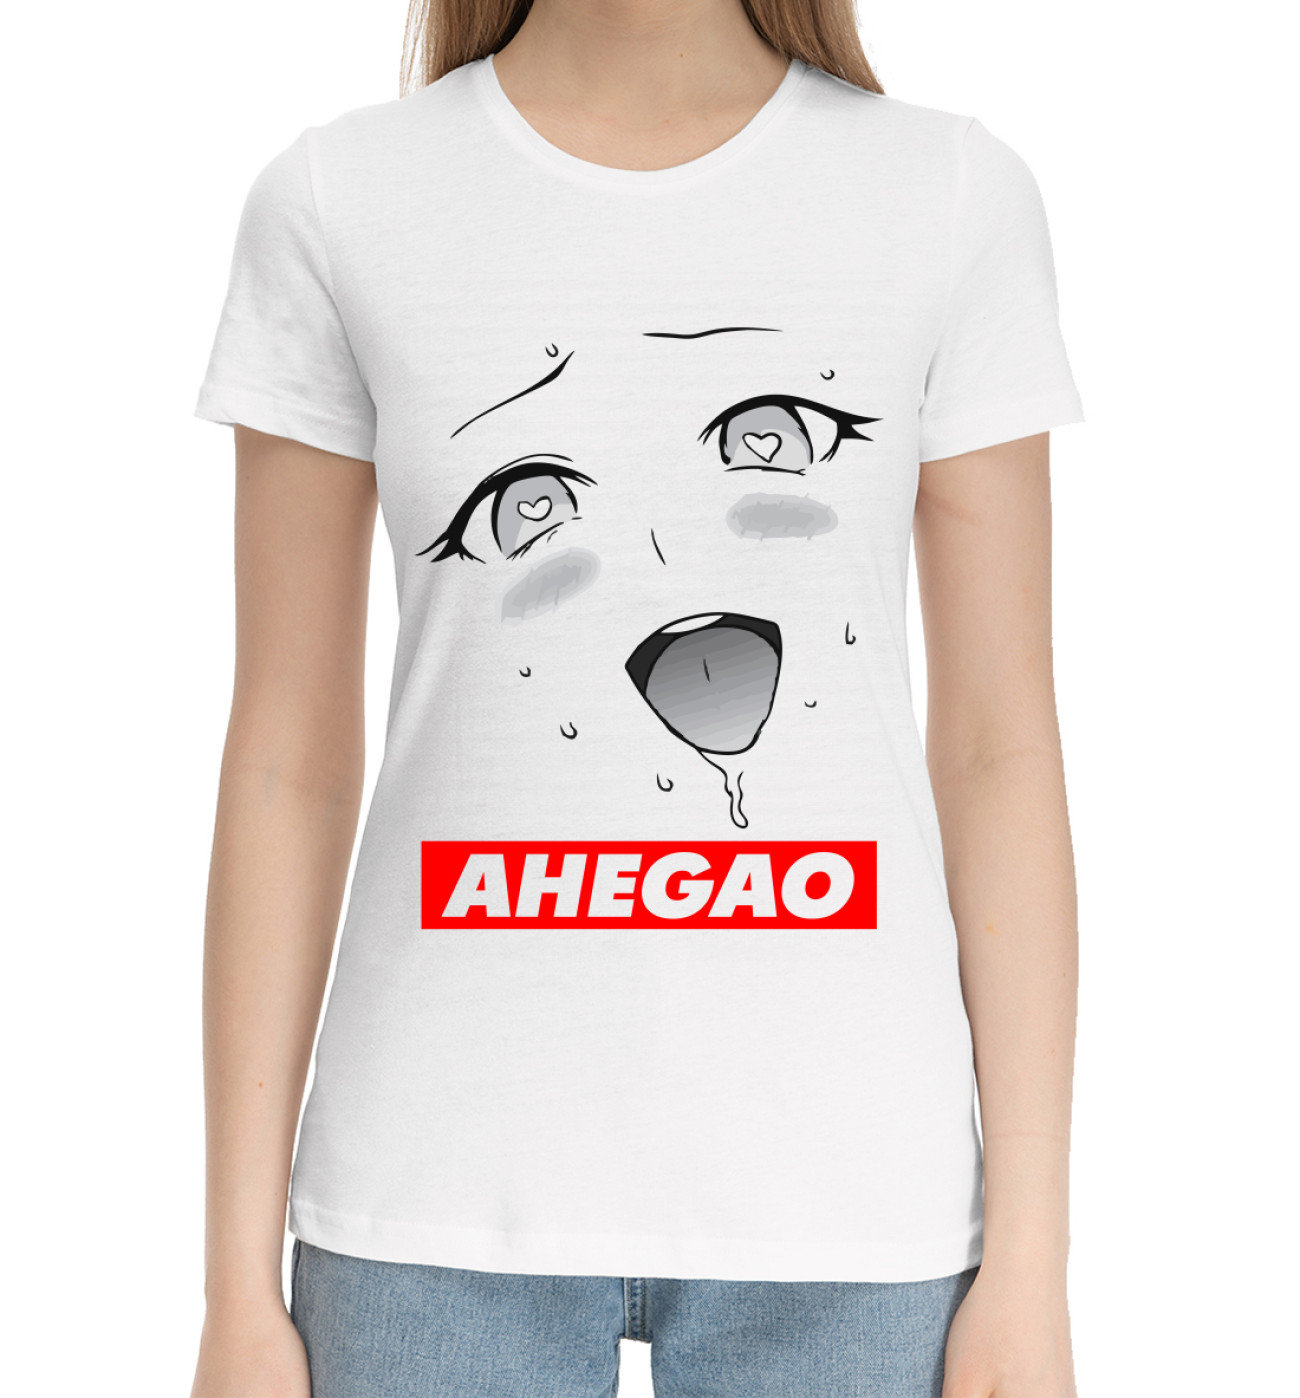 Женская Хлопковая футболка Ahegao, артикул: AHG-521816-hfu-1